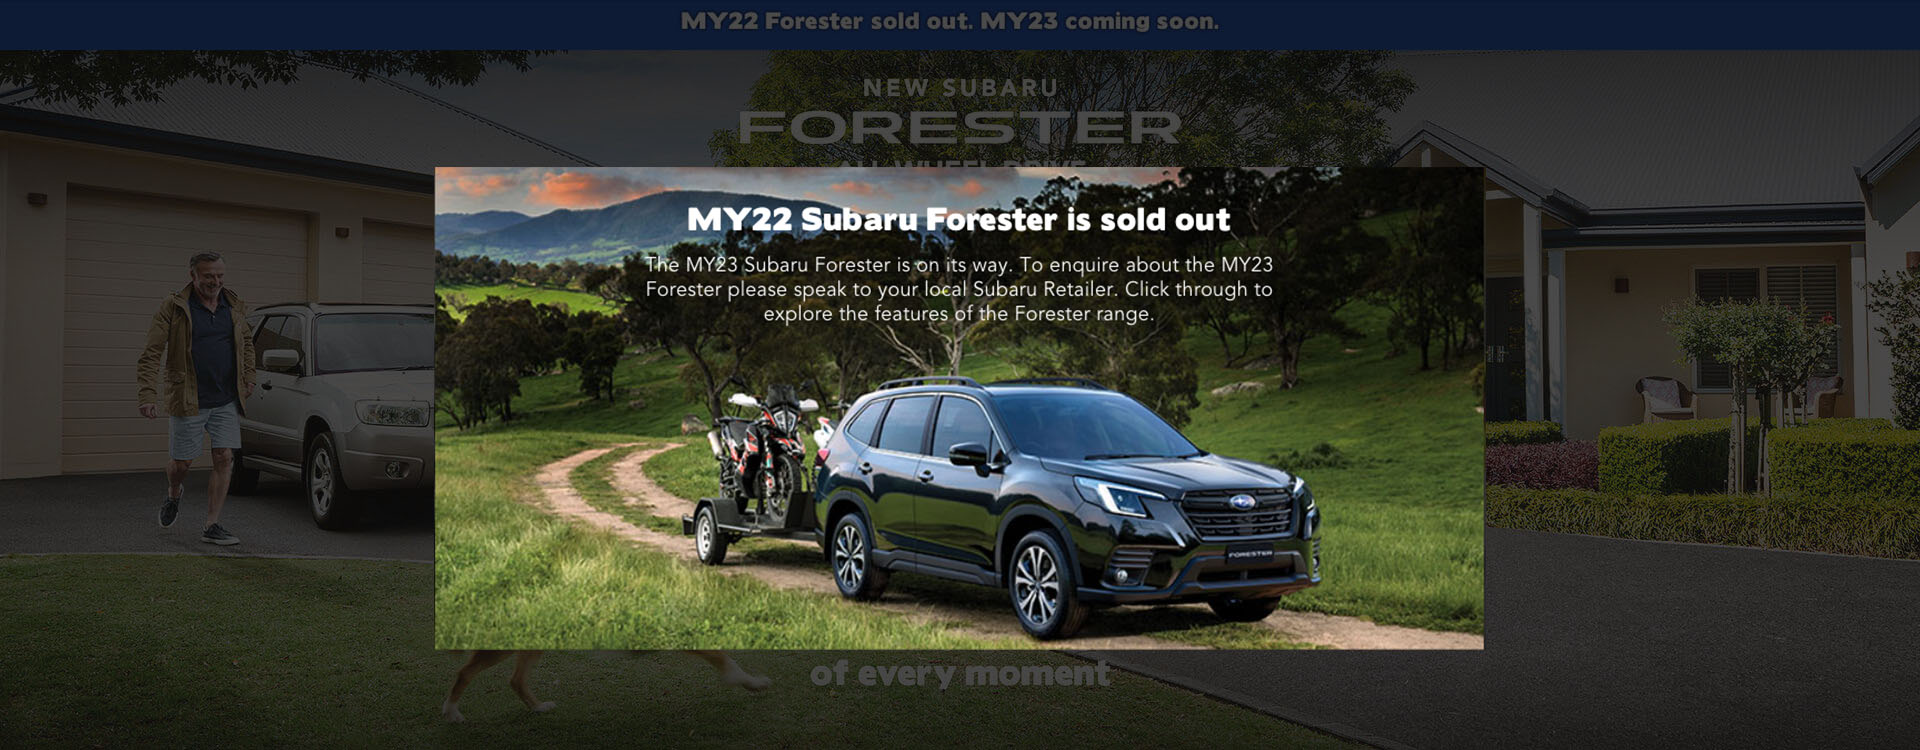 Subaru Forester Image